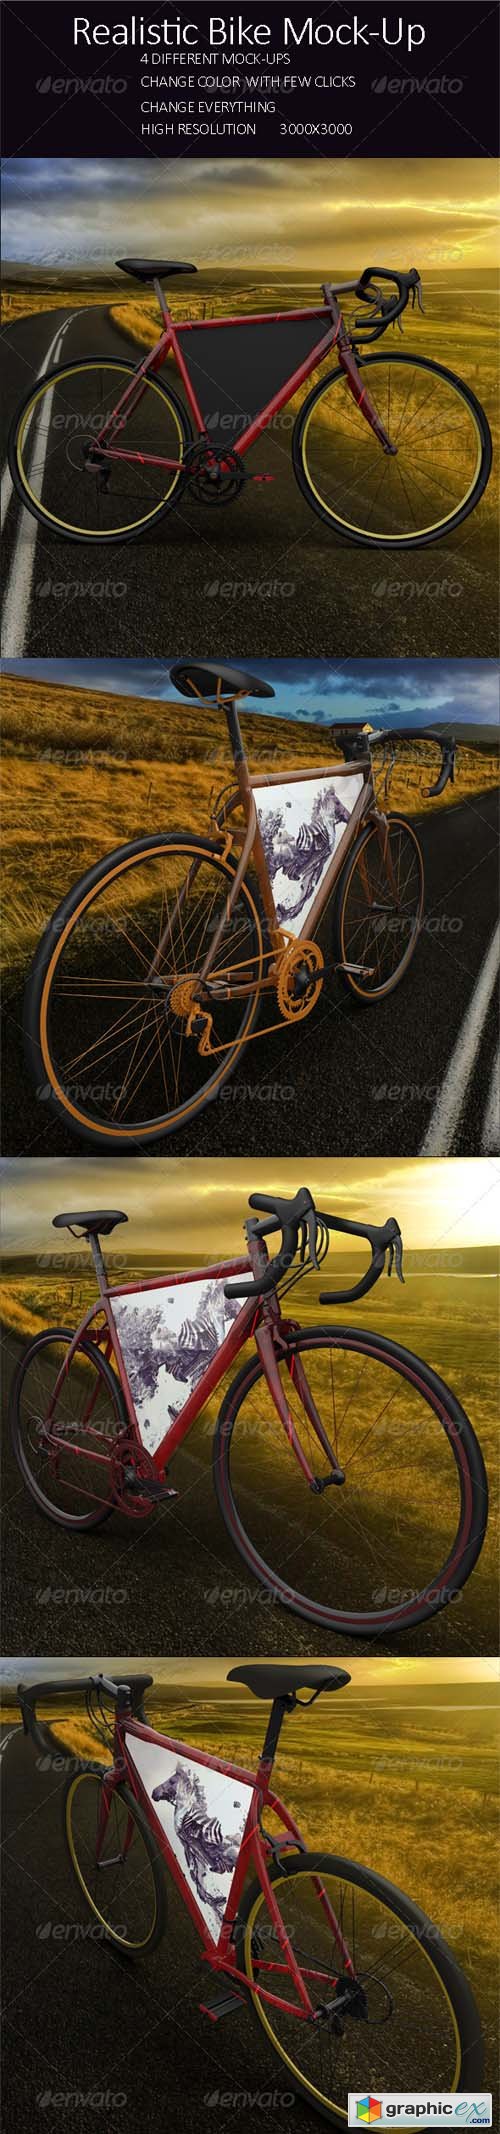 Realistic Bike Mock Up